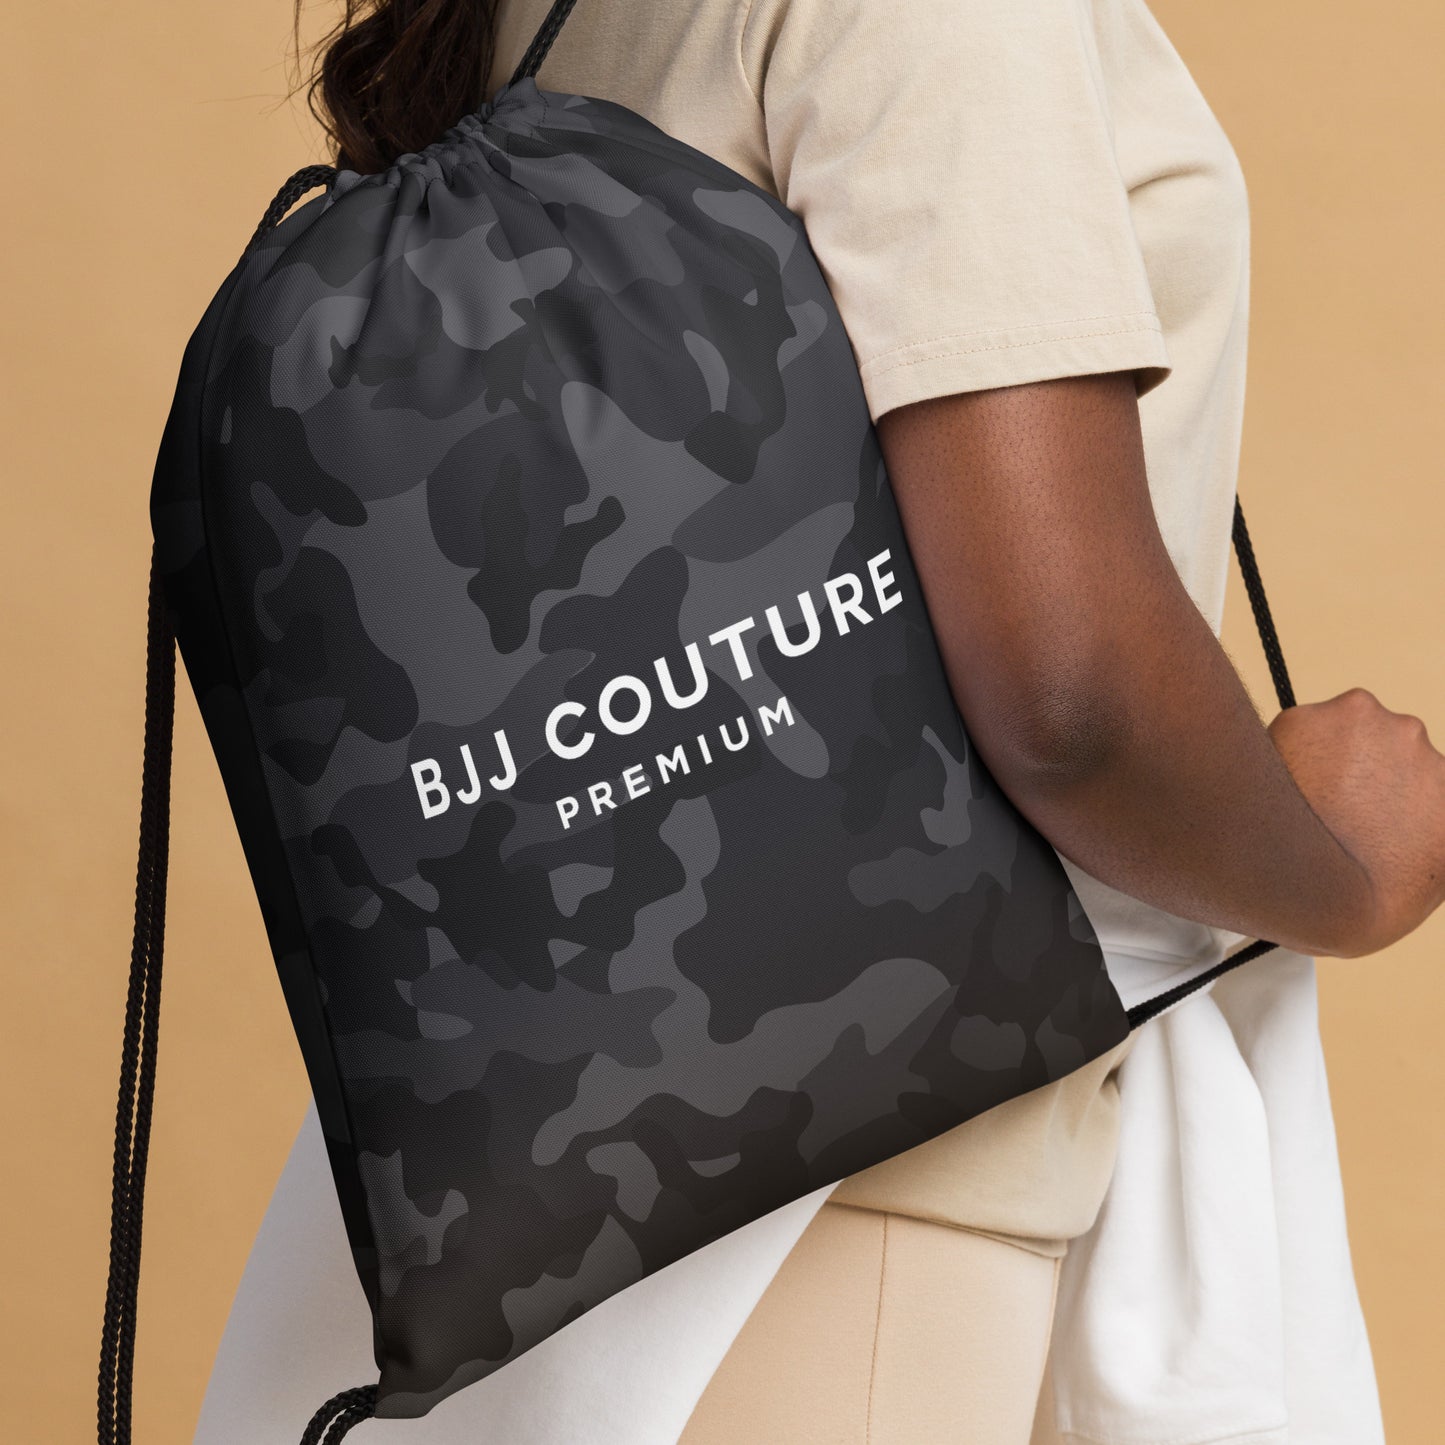 BJJ Couture Premium Black Camouflage Drawstring Dry bag